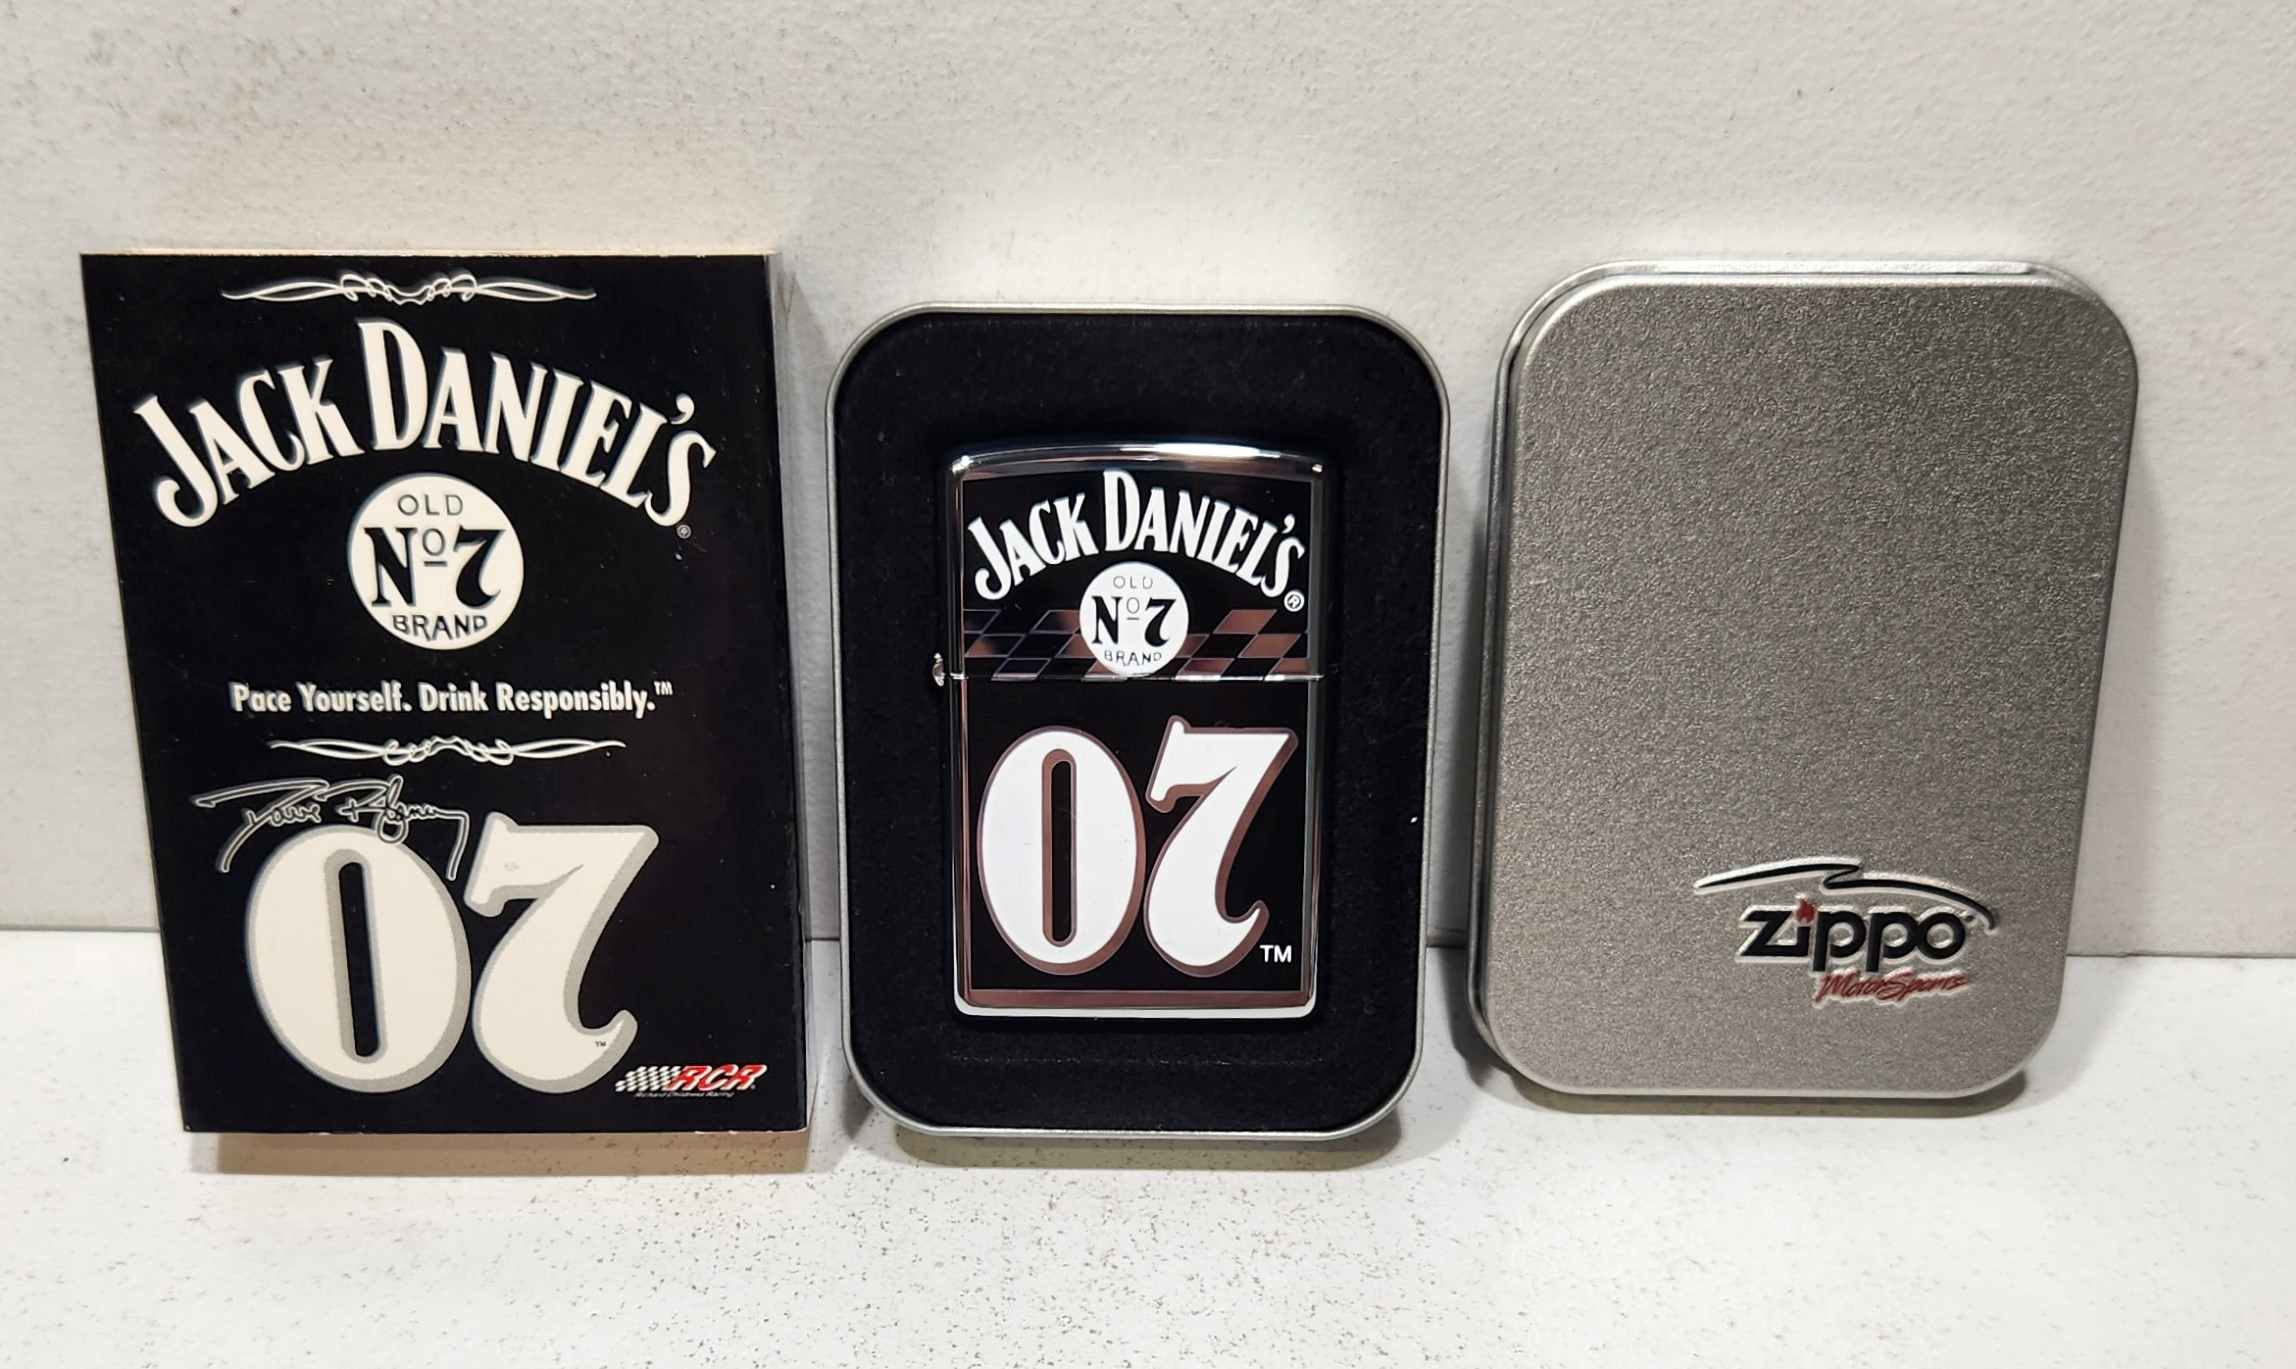 2005 Dave Blaney "Jack Daniels" Zippo lighter